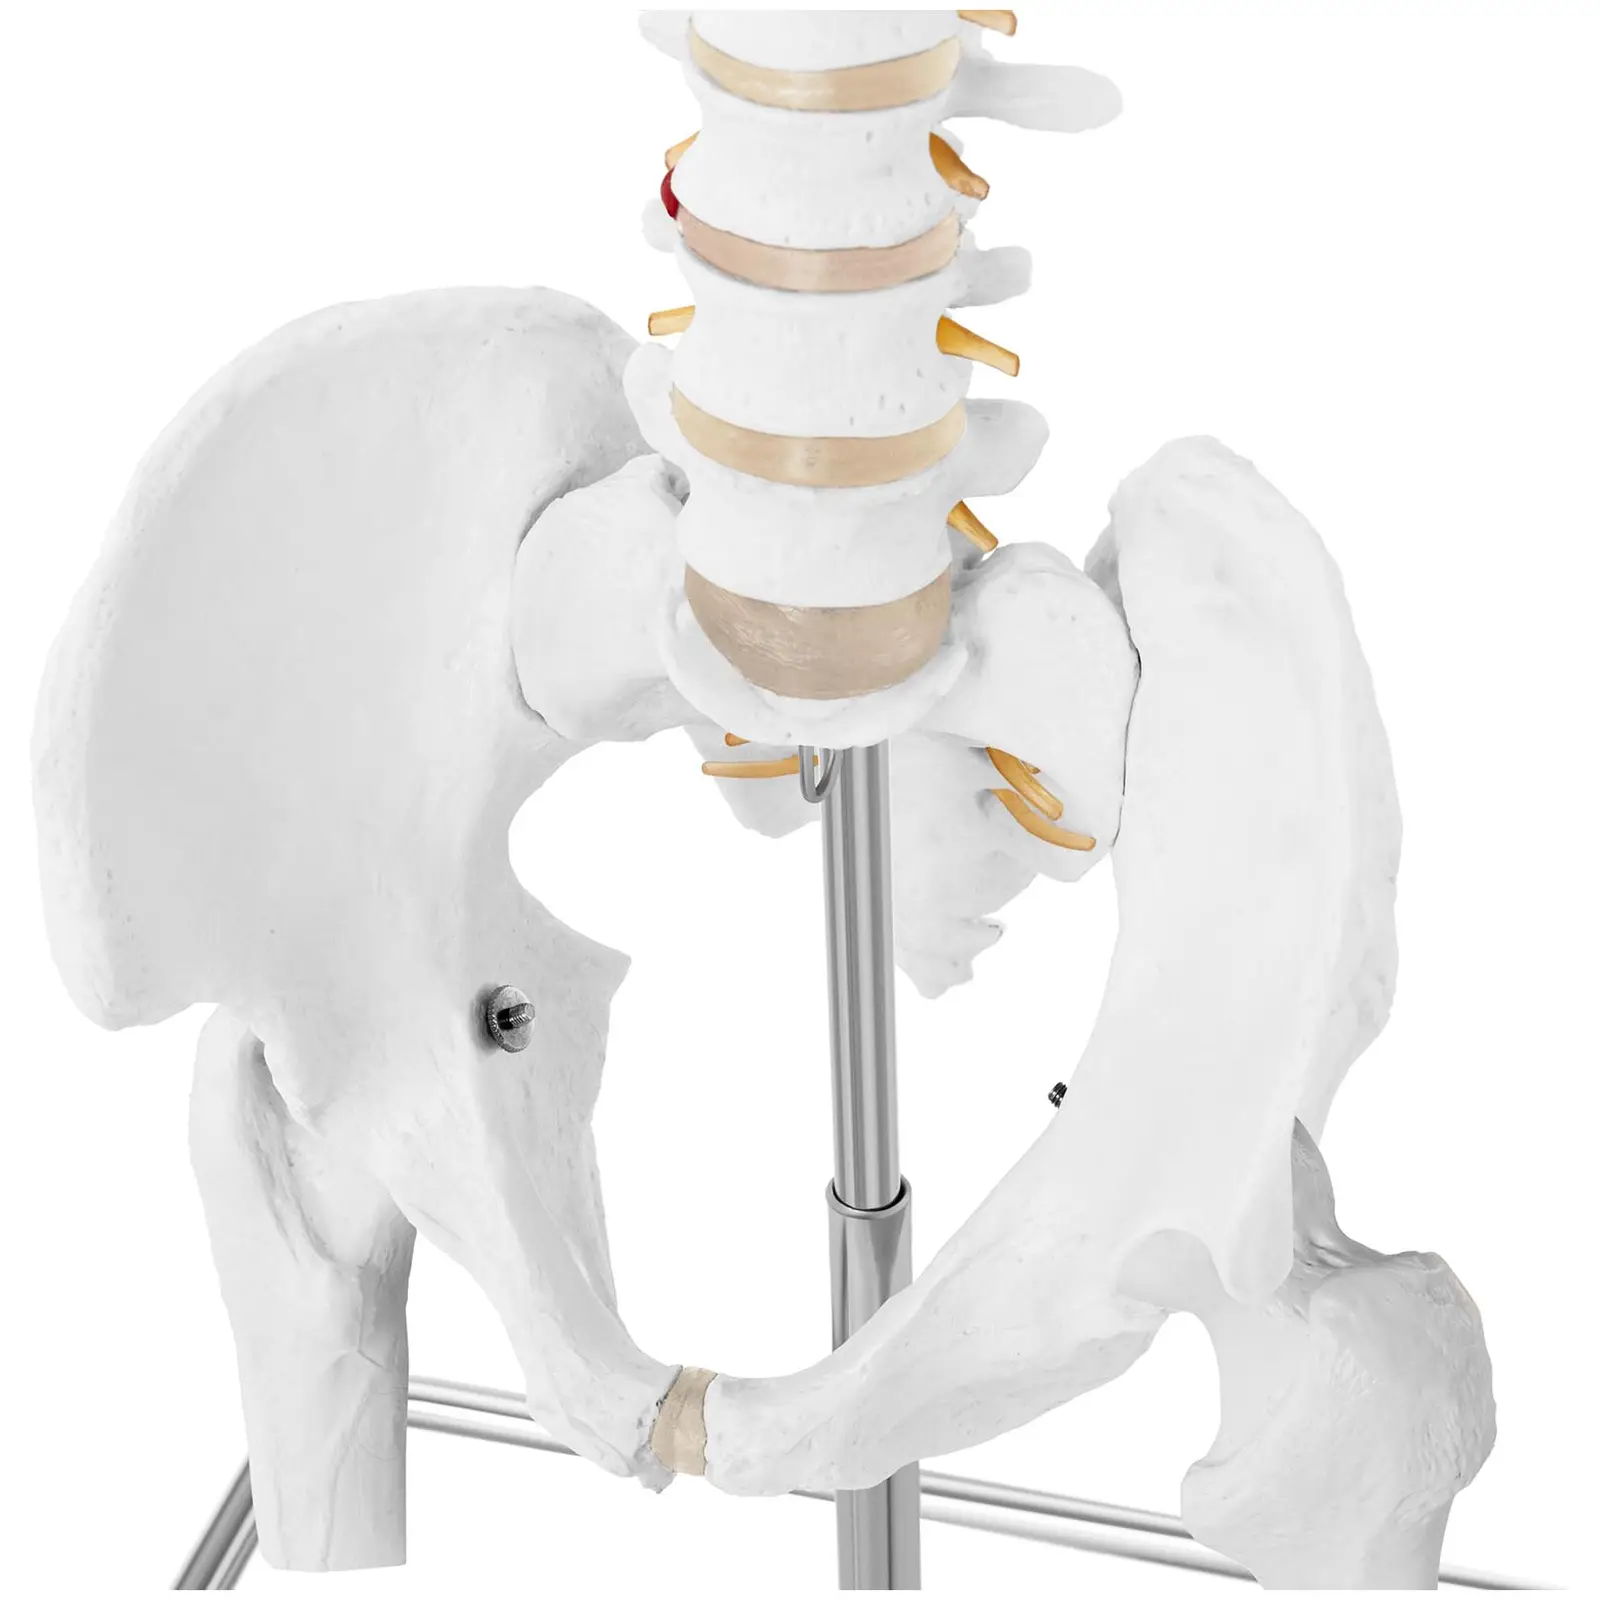 Spine Model with Pelvis